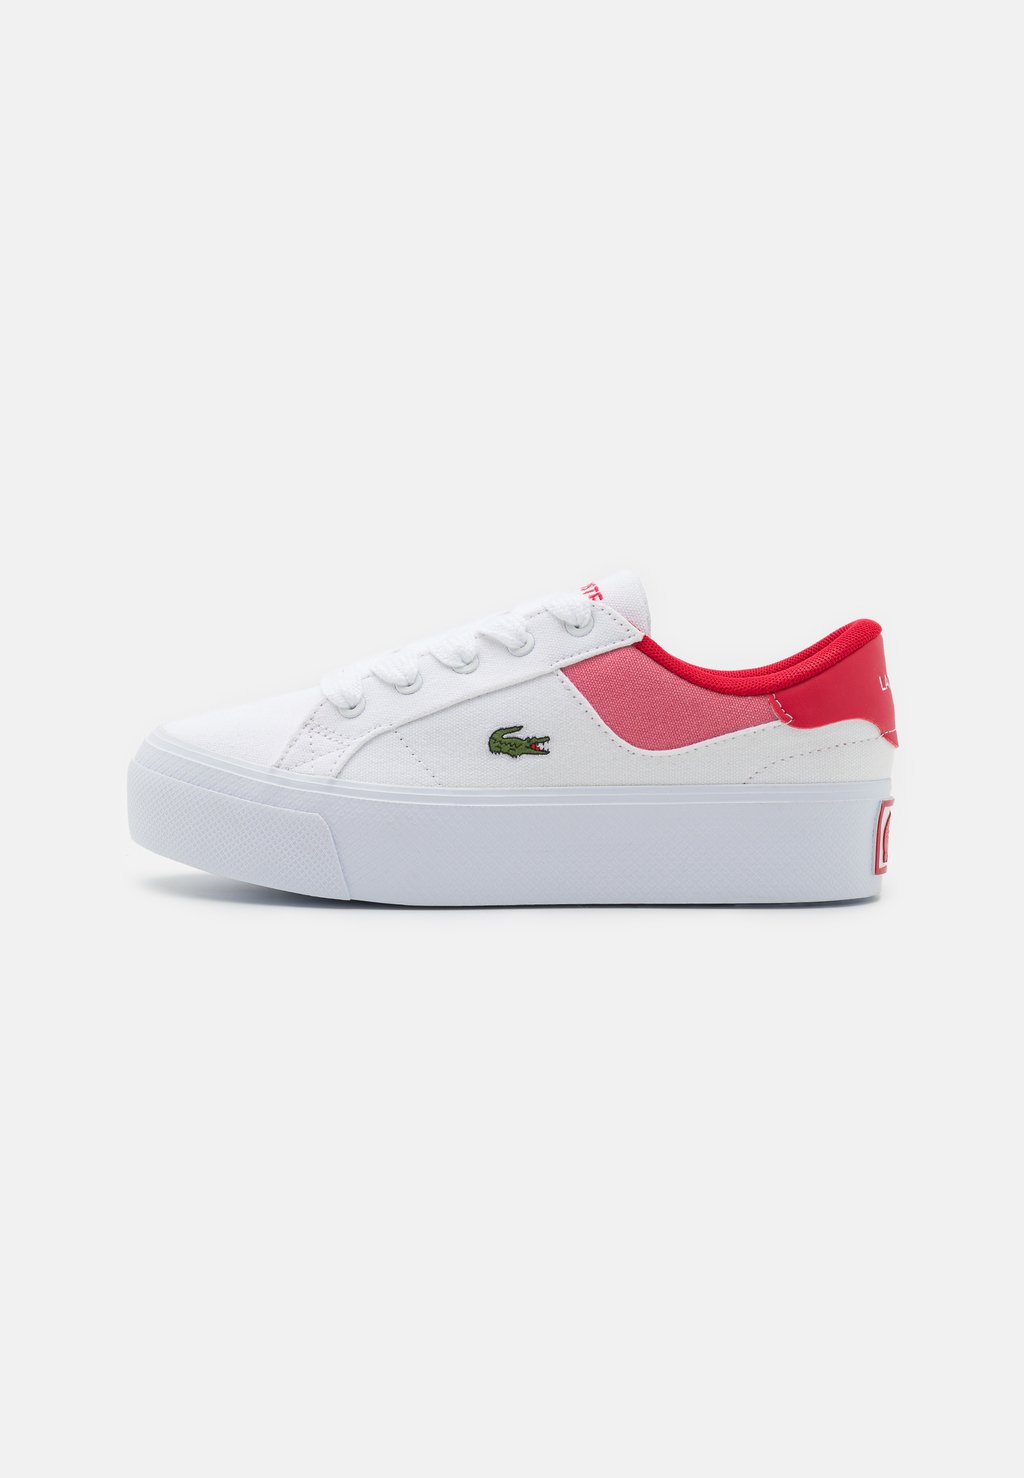 Низкие кроссовки Ziane Platform Lacoste, цвет white/red низкие кроссовки ziane platform lacoste цвет white light pink